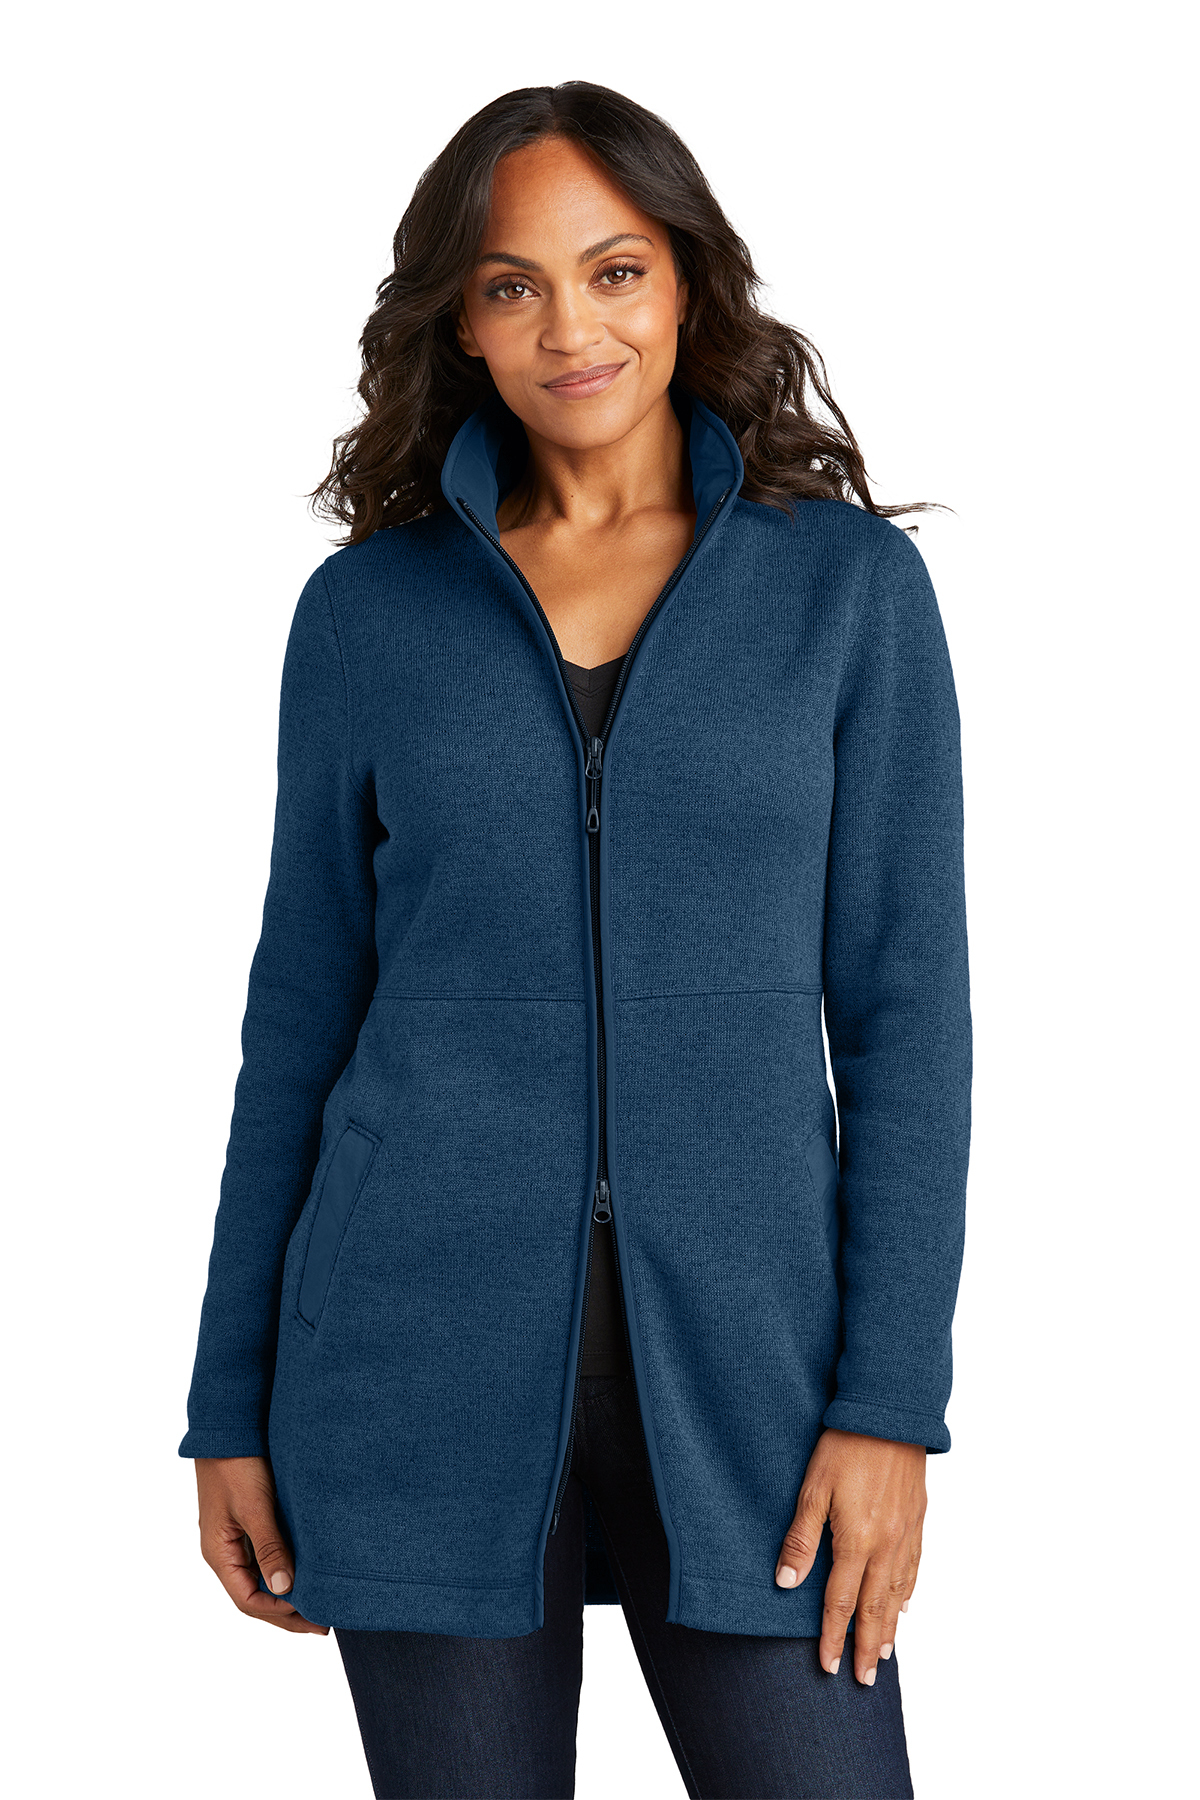 Port Authority® Ladies Arc Sweater Fleece Long Jacket L425 on Vimeo